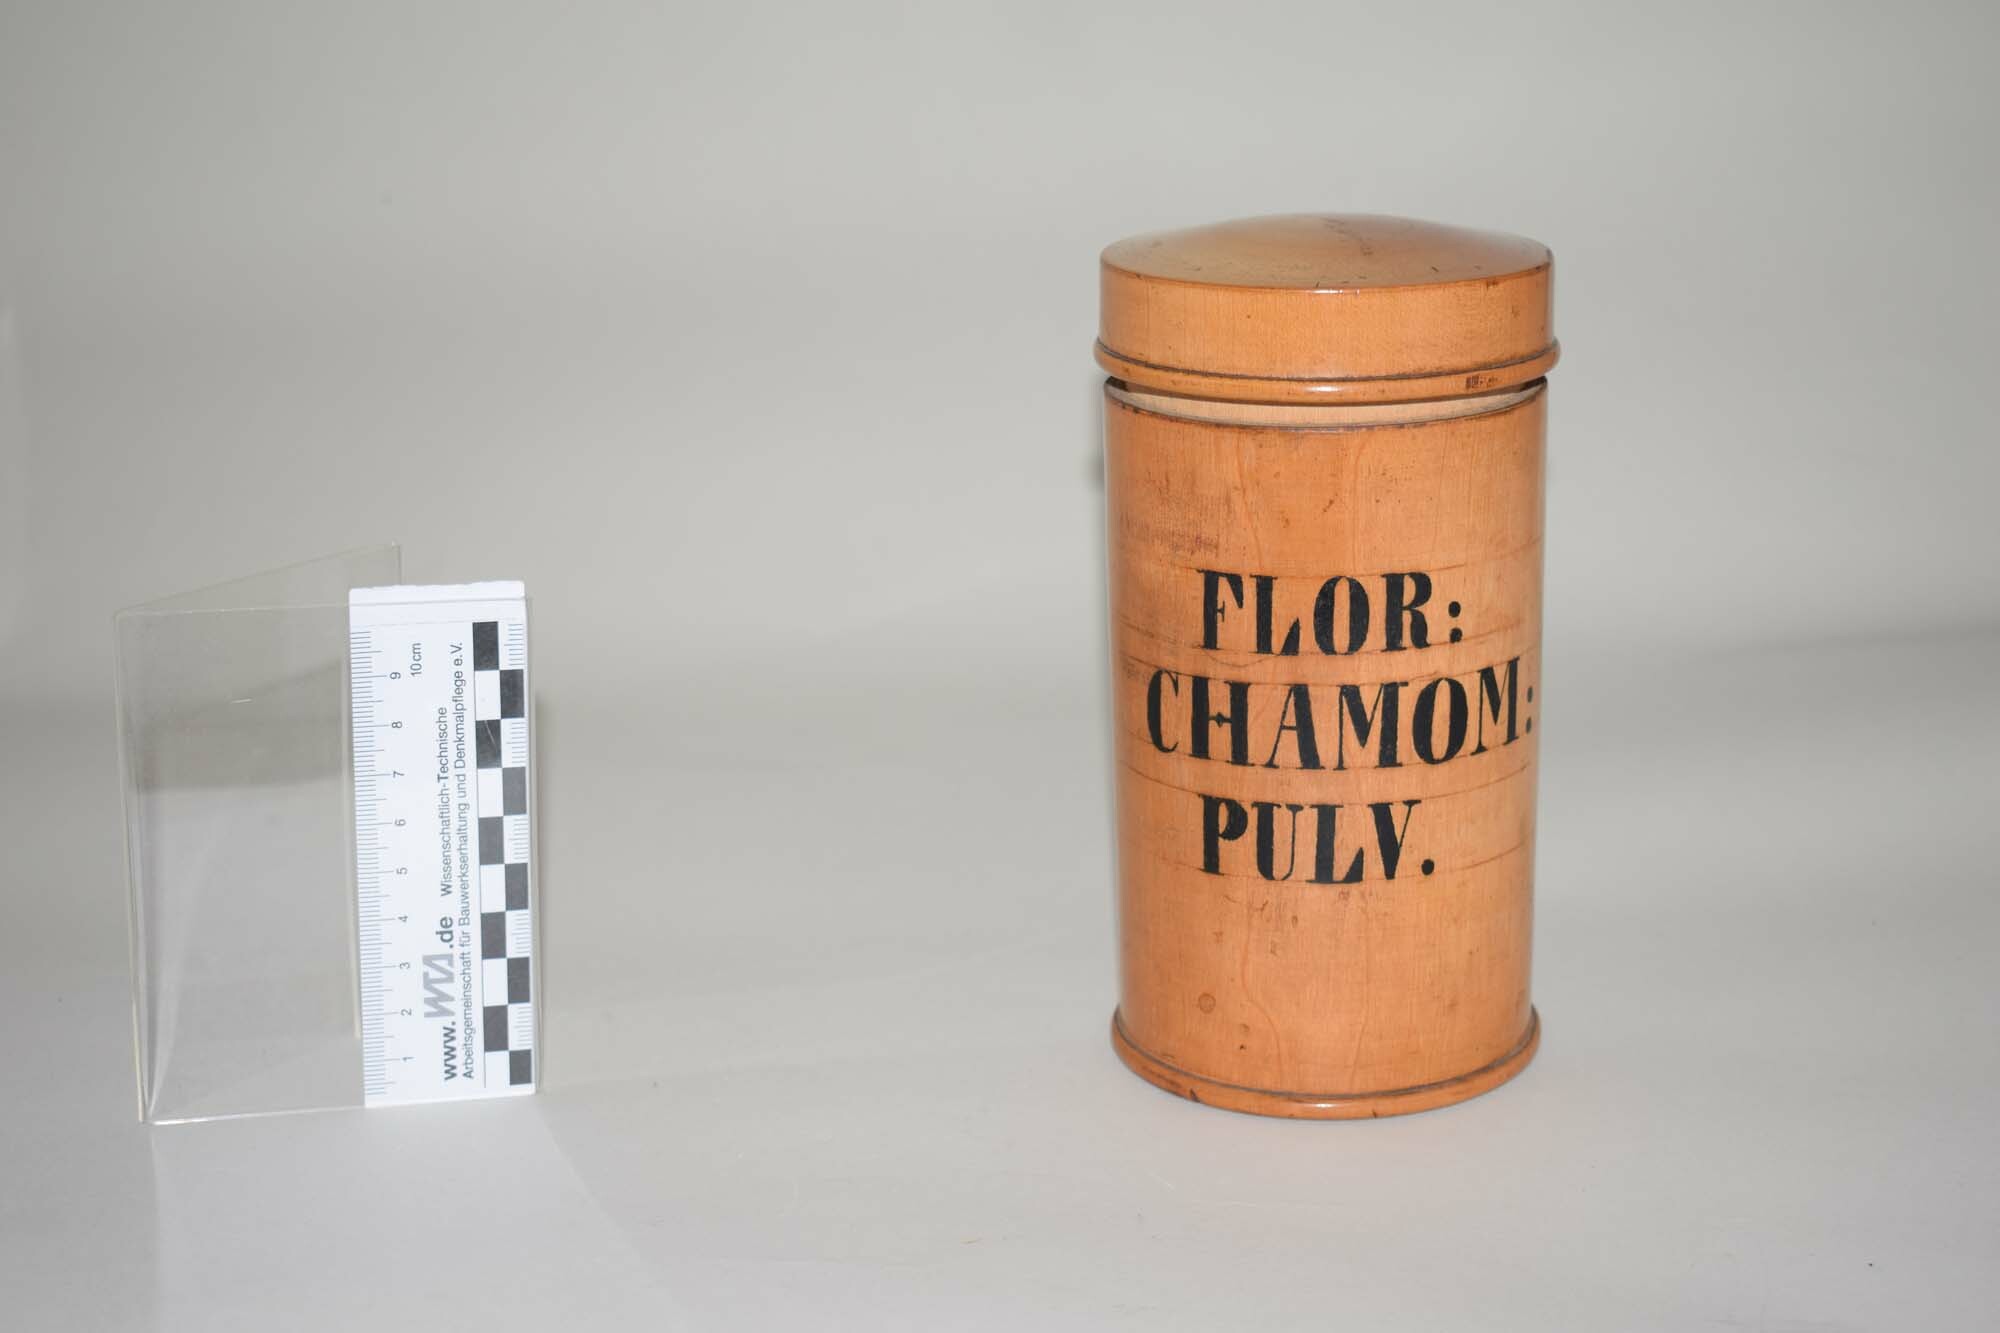 Dose mit Aufschrift "FLOR:CHAMOM:PULV." (Kamillenblüten, pulverisiert) (Heimatmuseum Dohna CC BY-NC-SA)